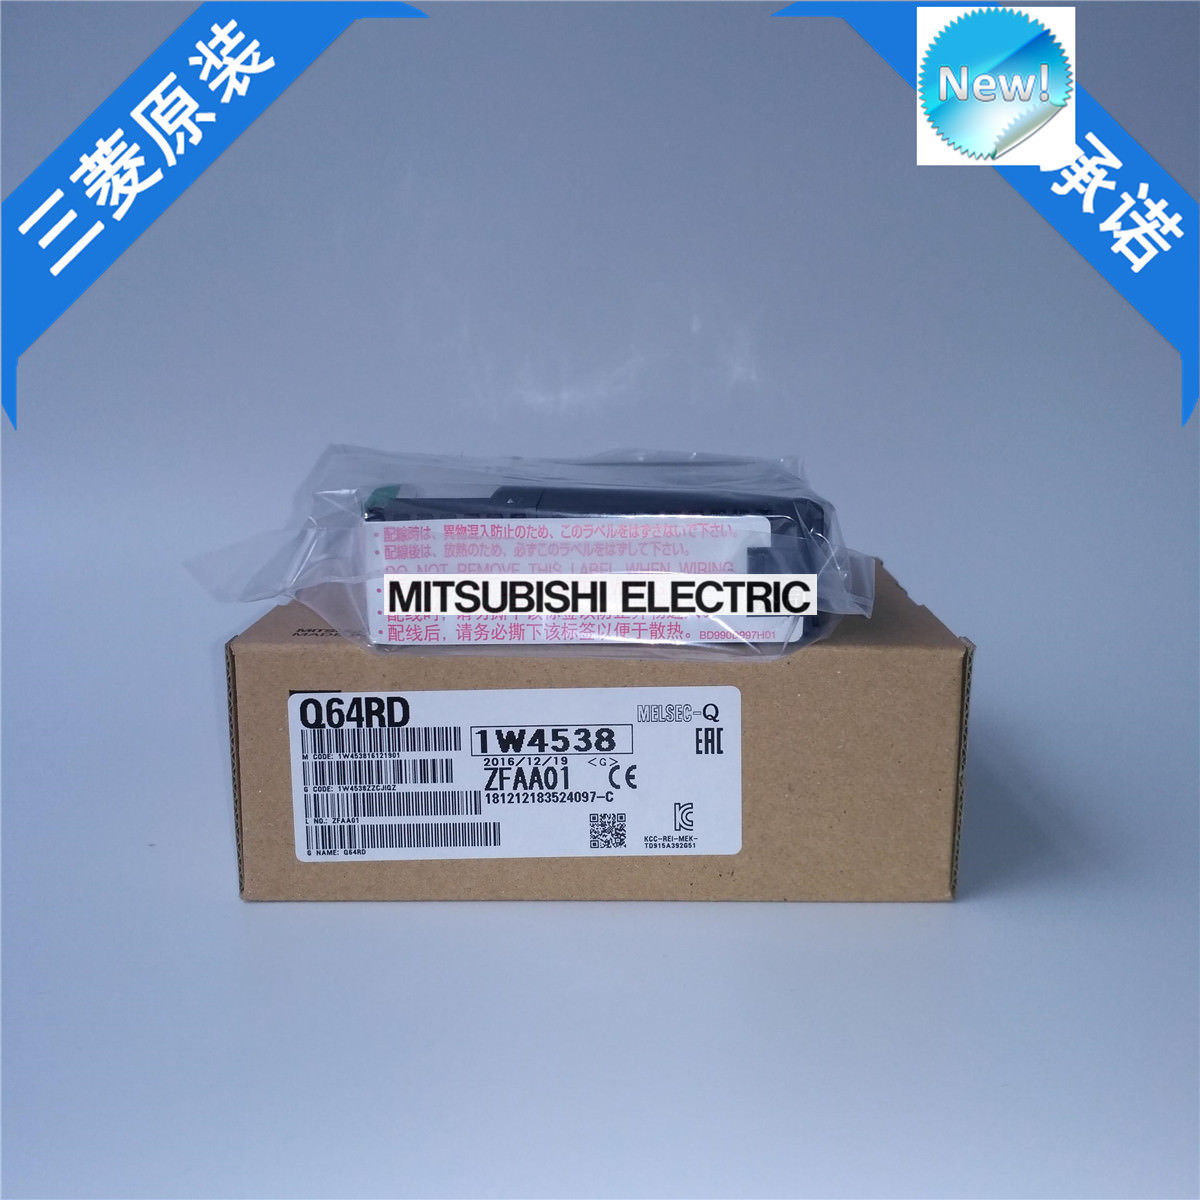 New Mitsubishi PLC Q64RD In Box